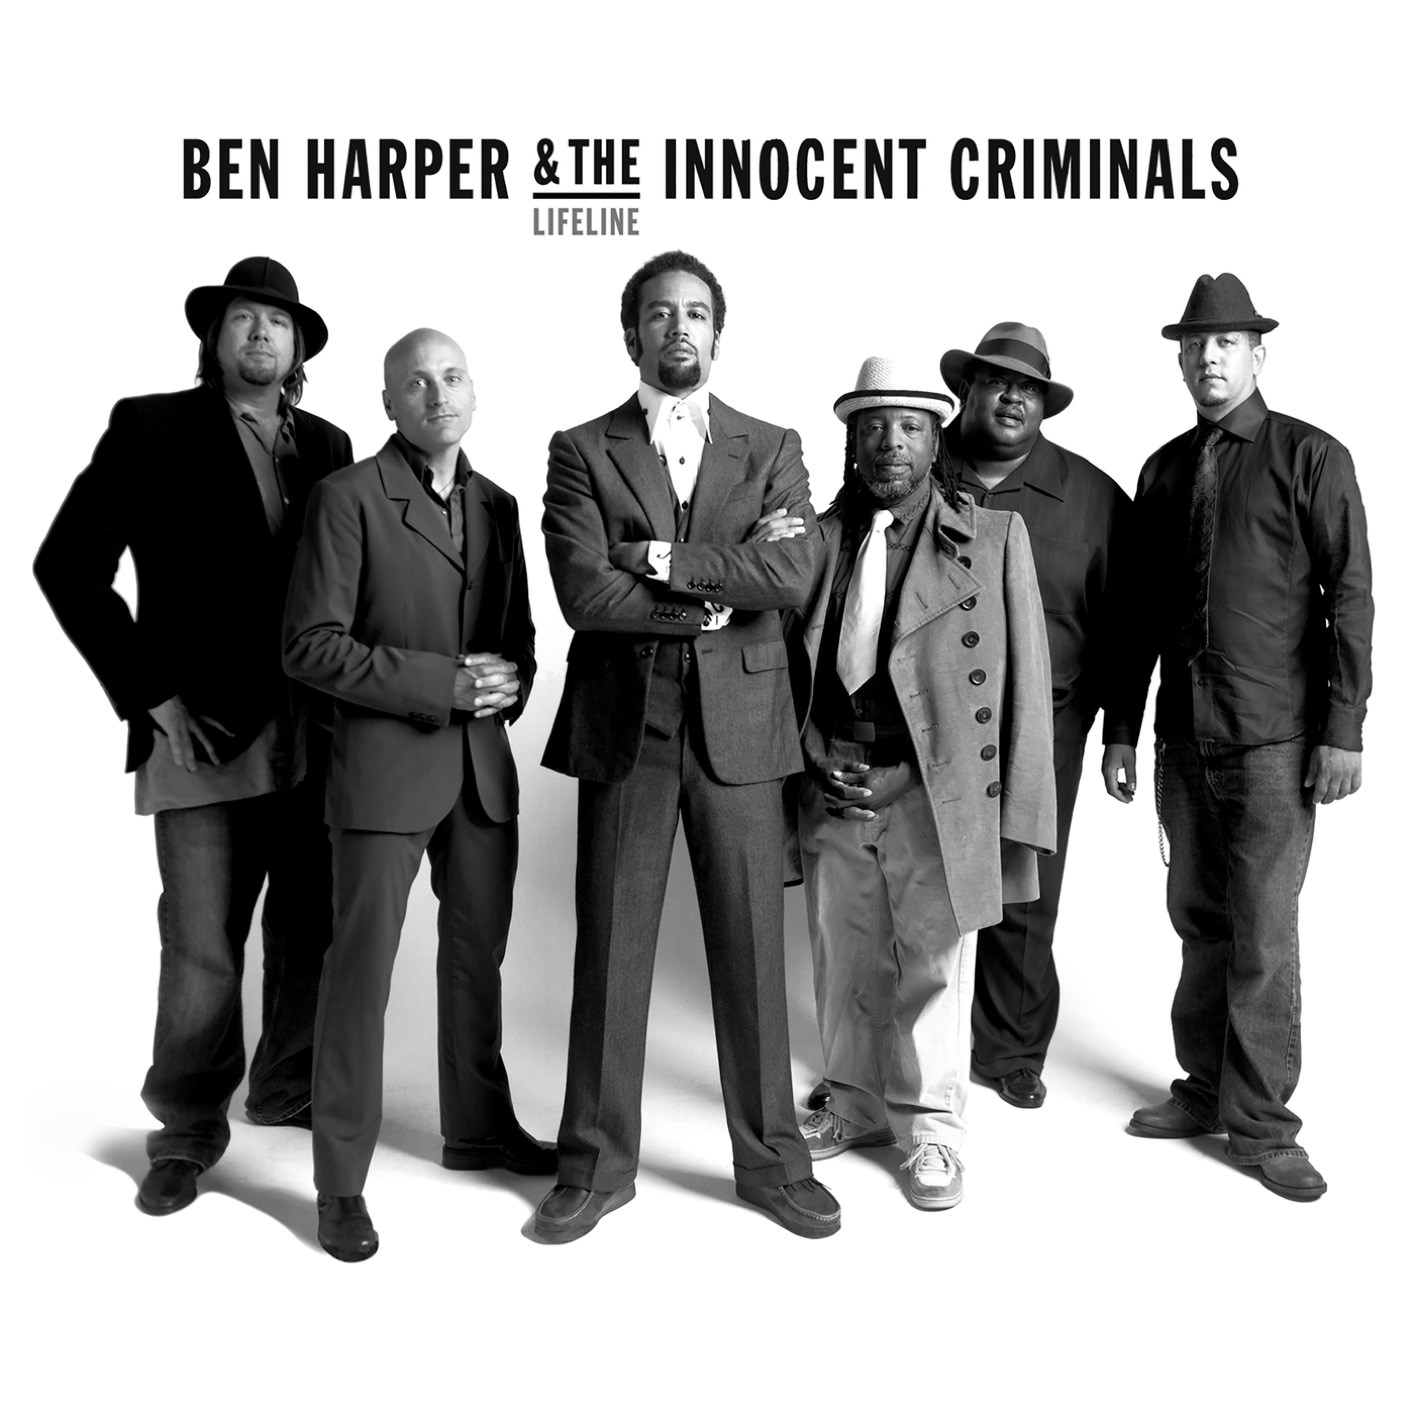 Ben Harper & The Innocent Criminals - Lifeline (2007/2017) [HDTracks FLAC 24bit/192kHz]